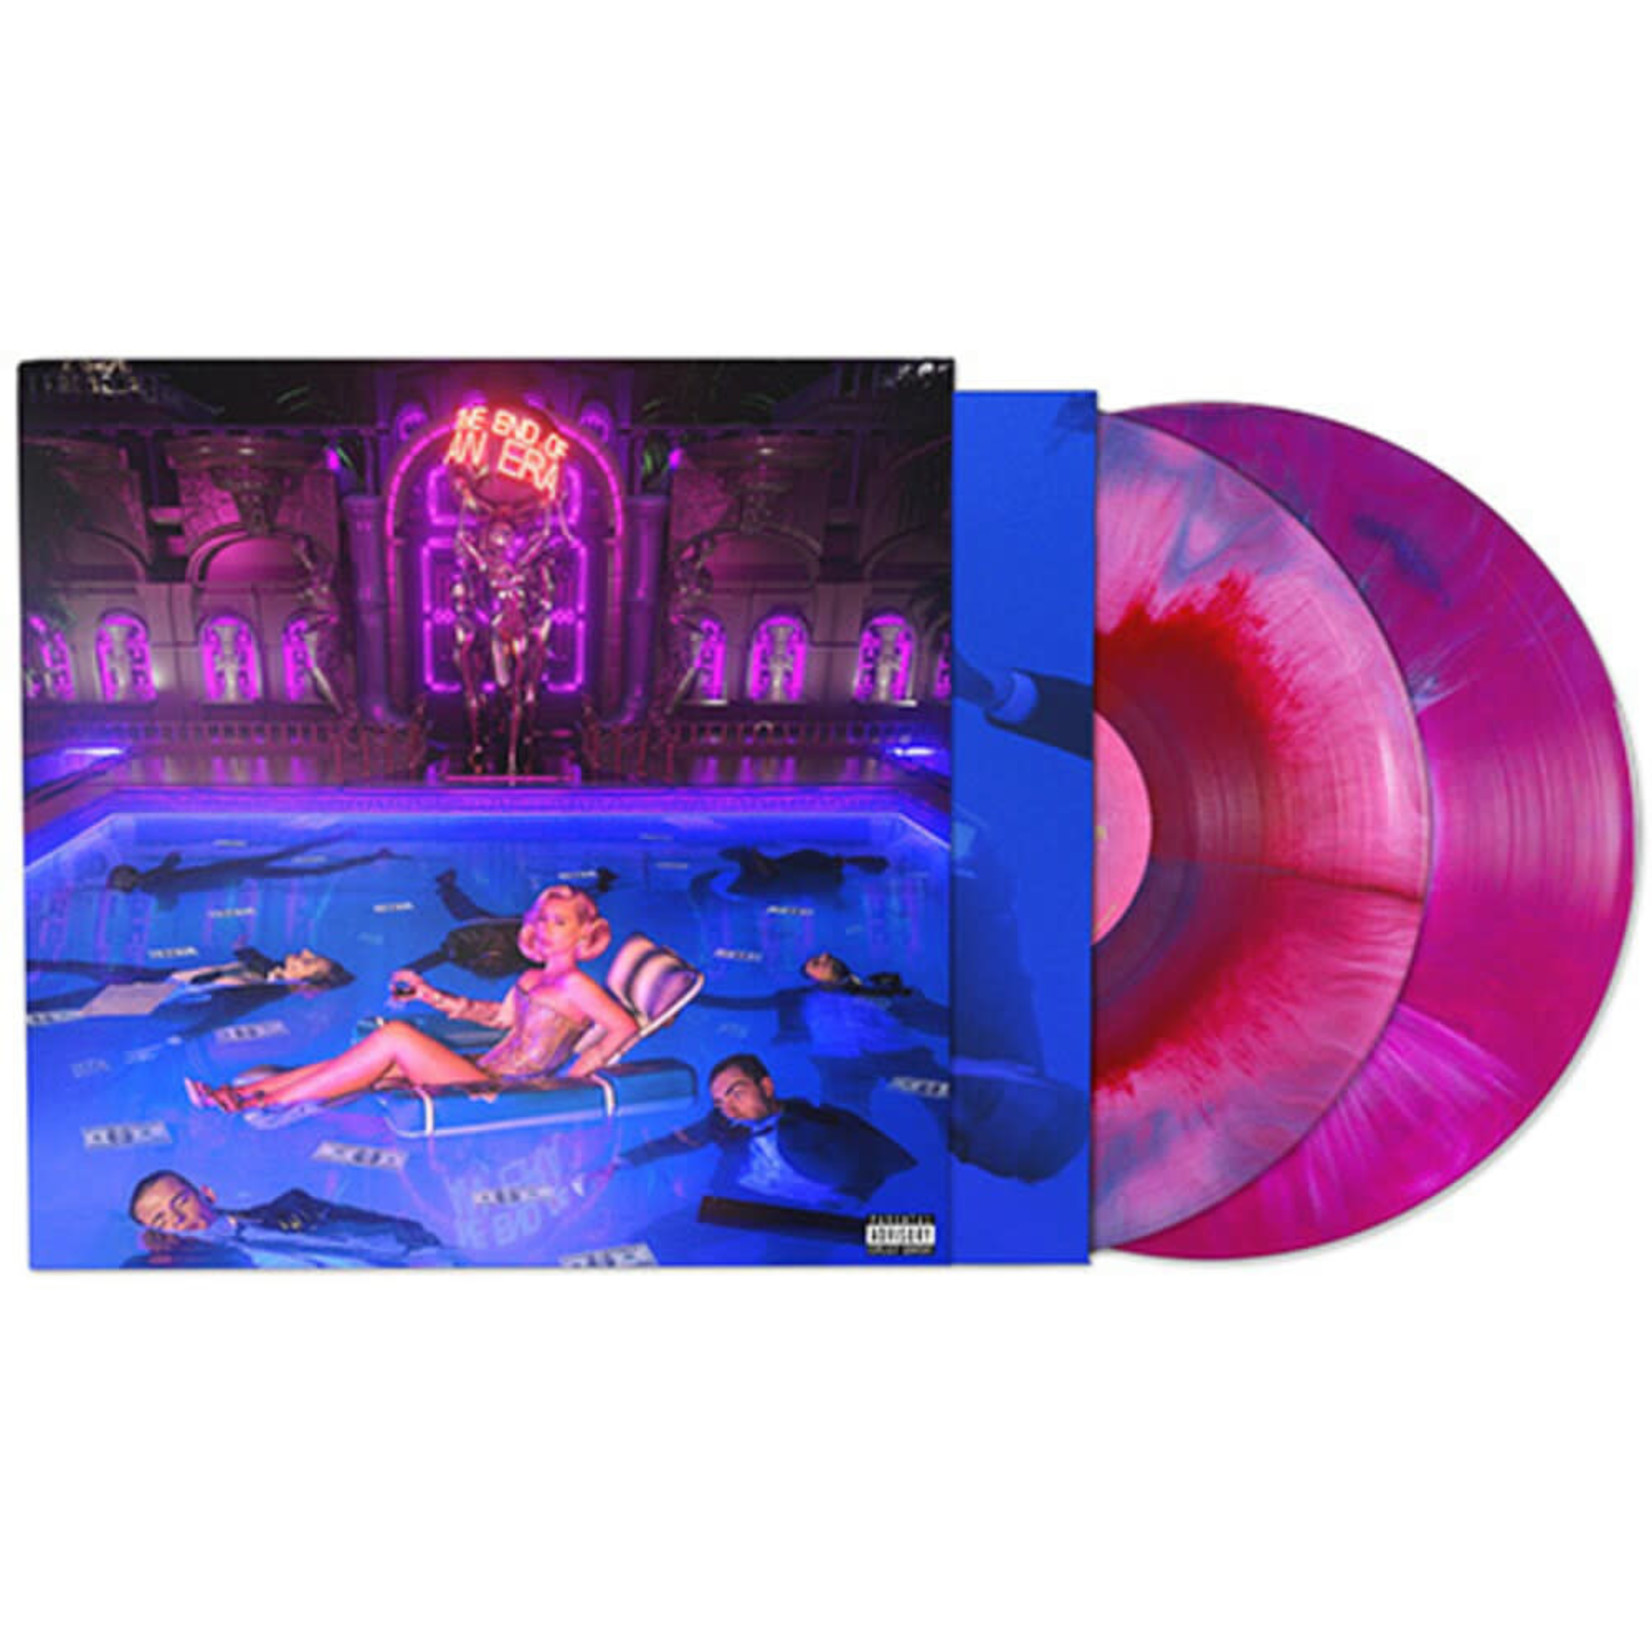 [New] Iggy Azalea - The End Of An Era (2LP, deluxe edition, red blue & purple vinyl)